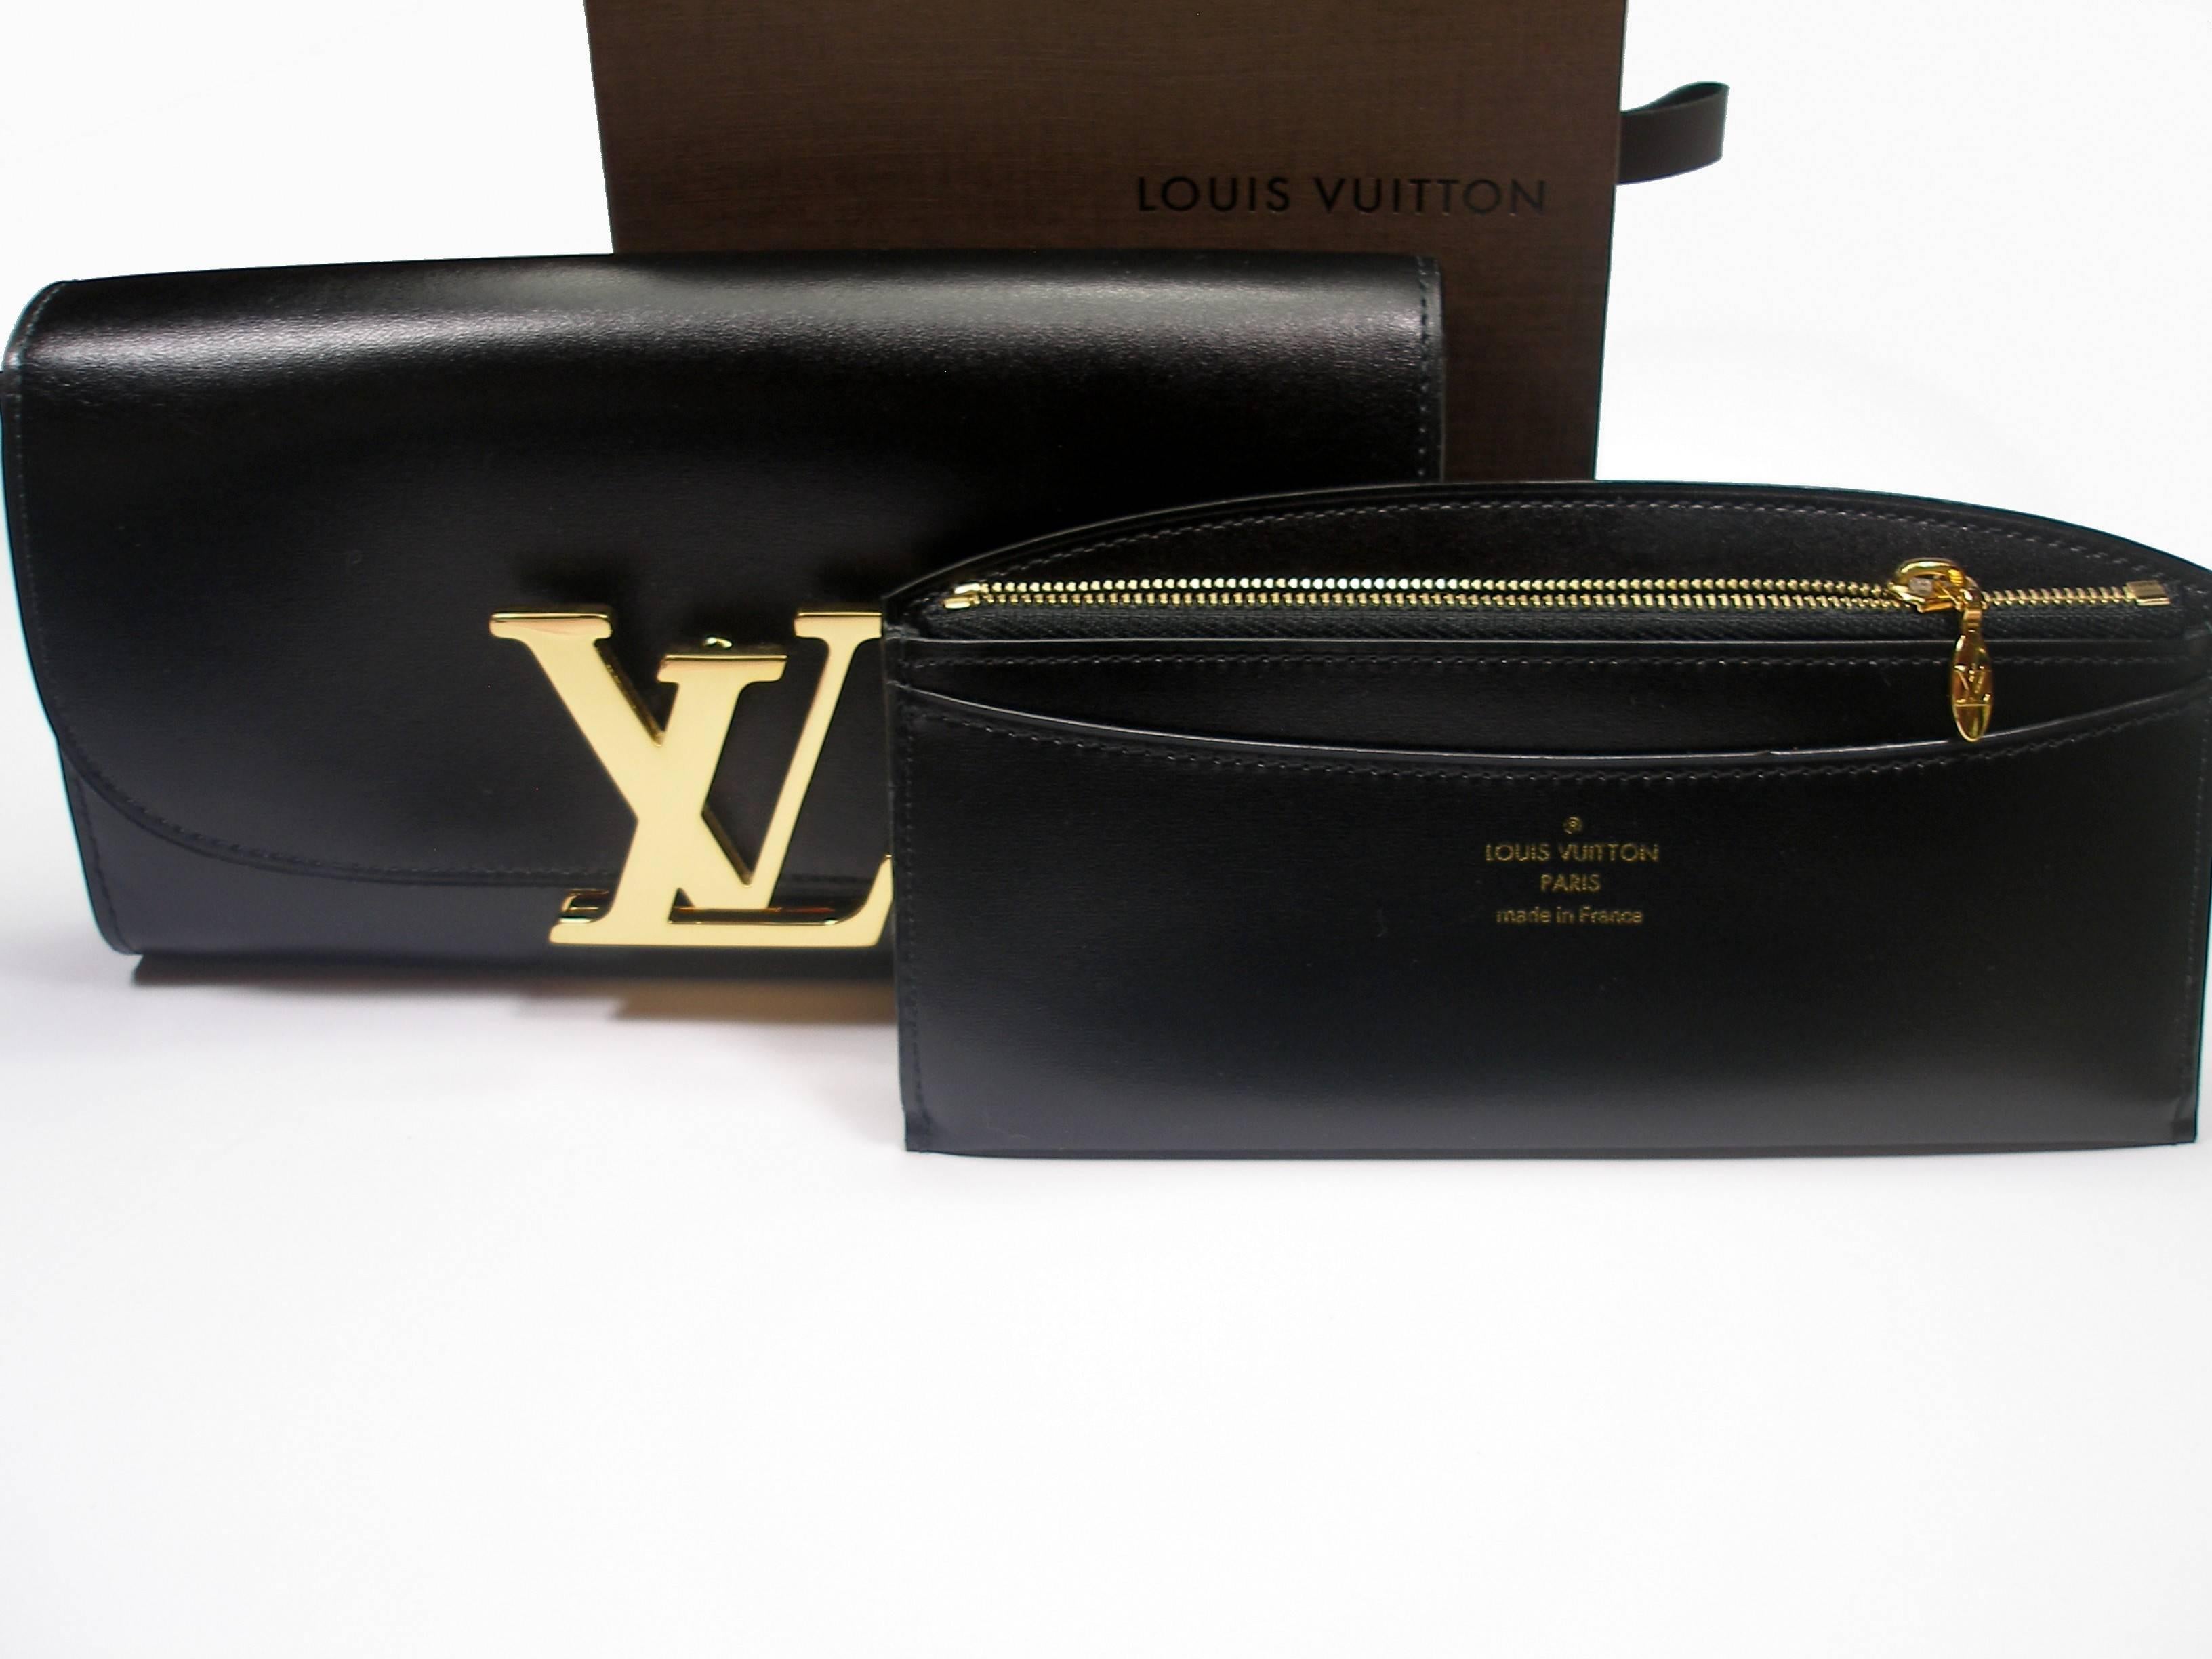  LOUIS VUITTON Box Calfskin Vivienne Duo LV Long Wallet Noir Black / BRAND NEW  2